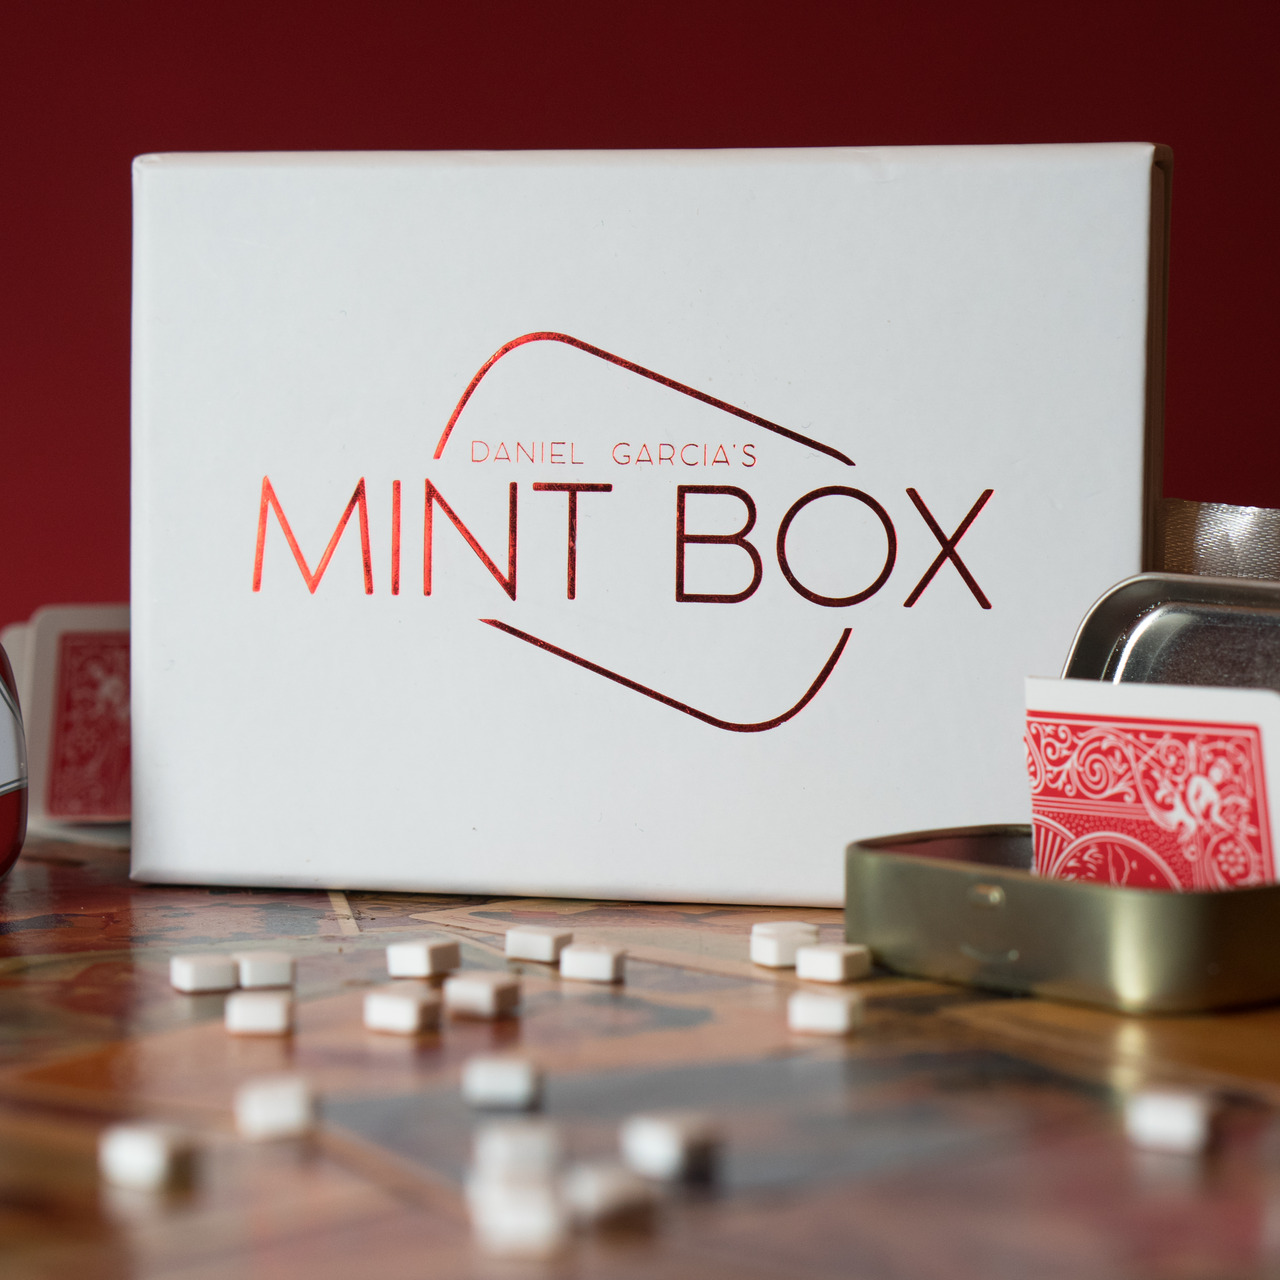 Mint Box by Daniel Garcia (video download High Quality)